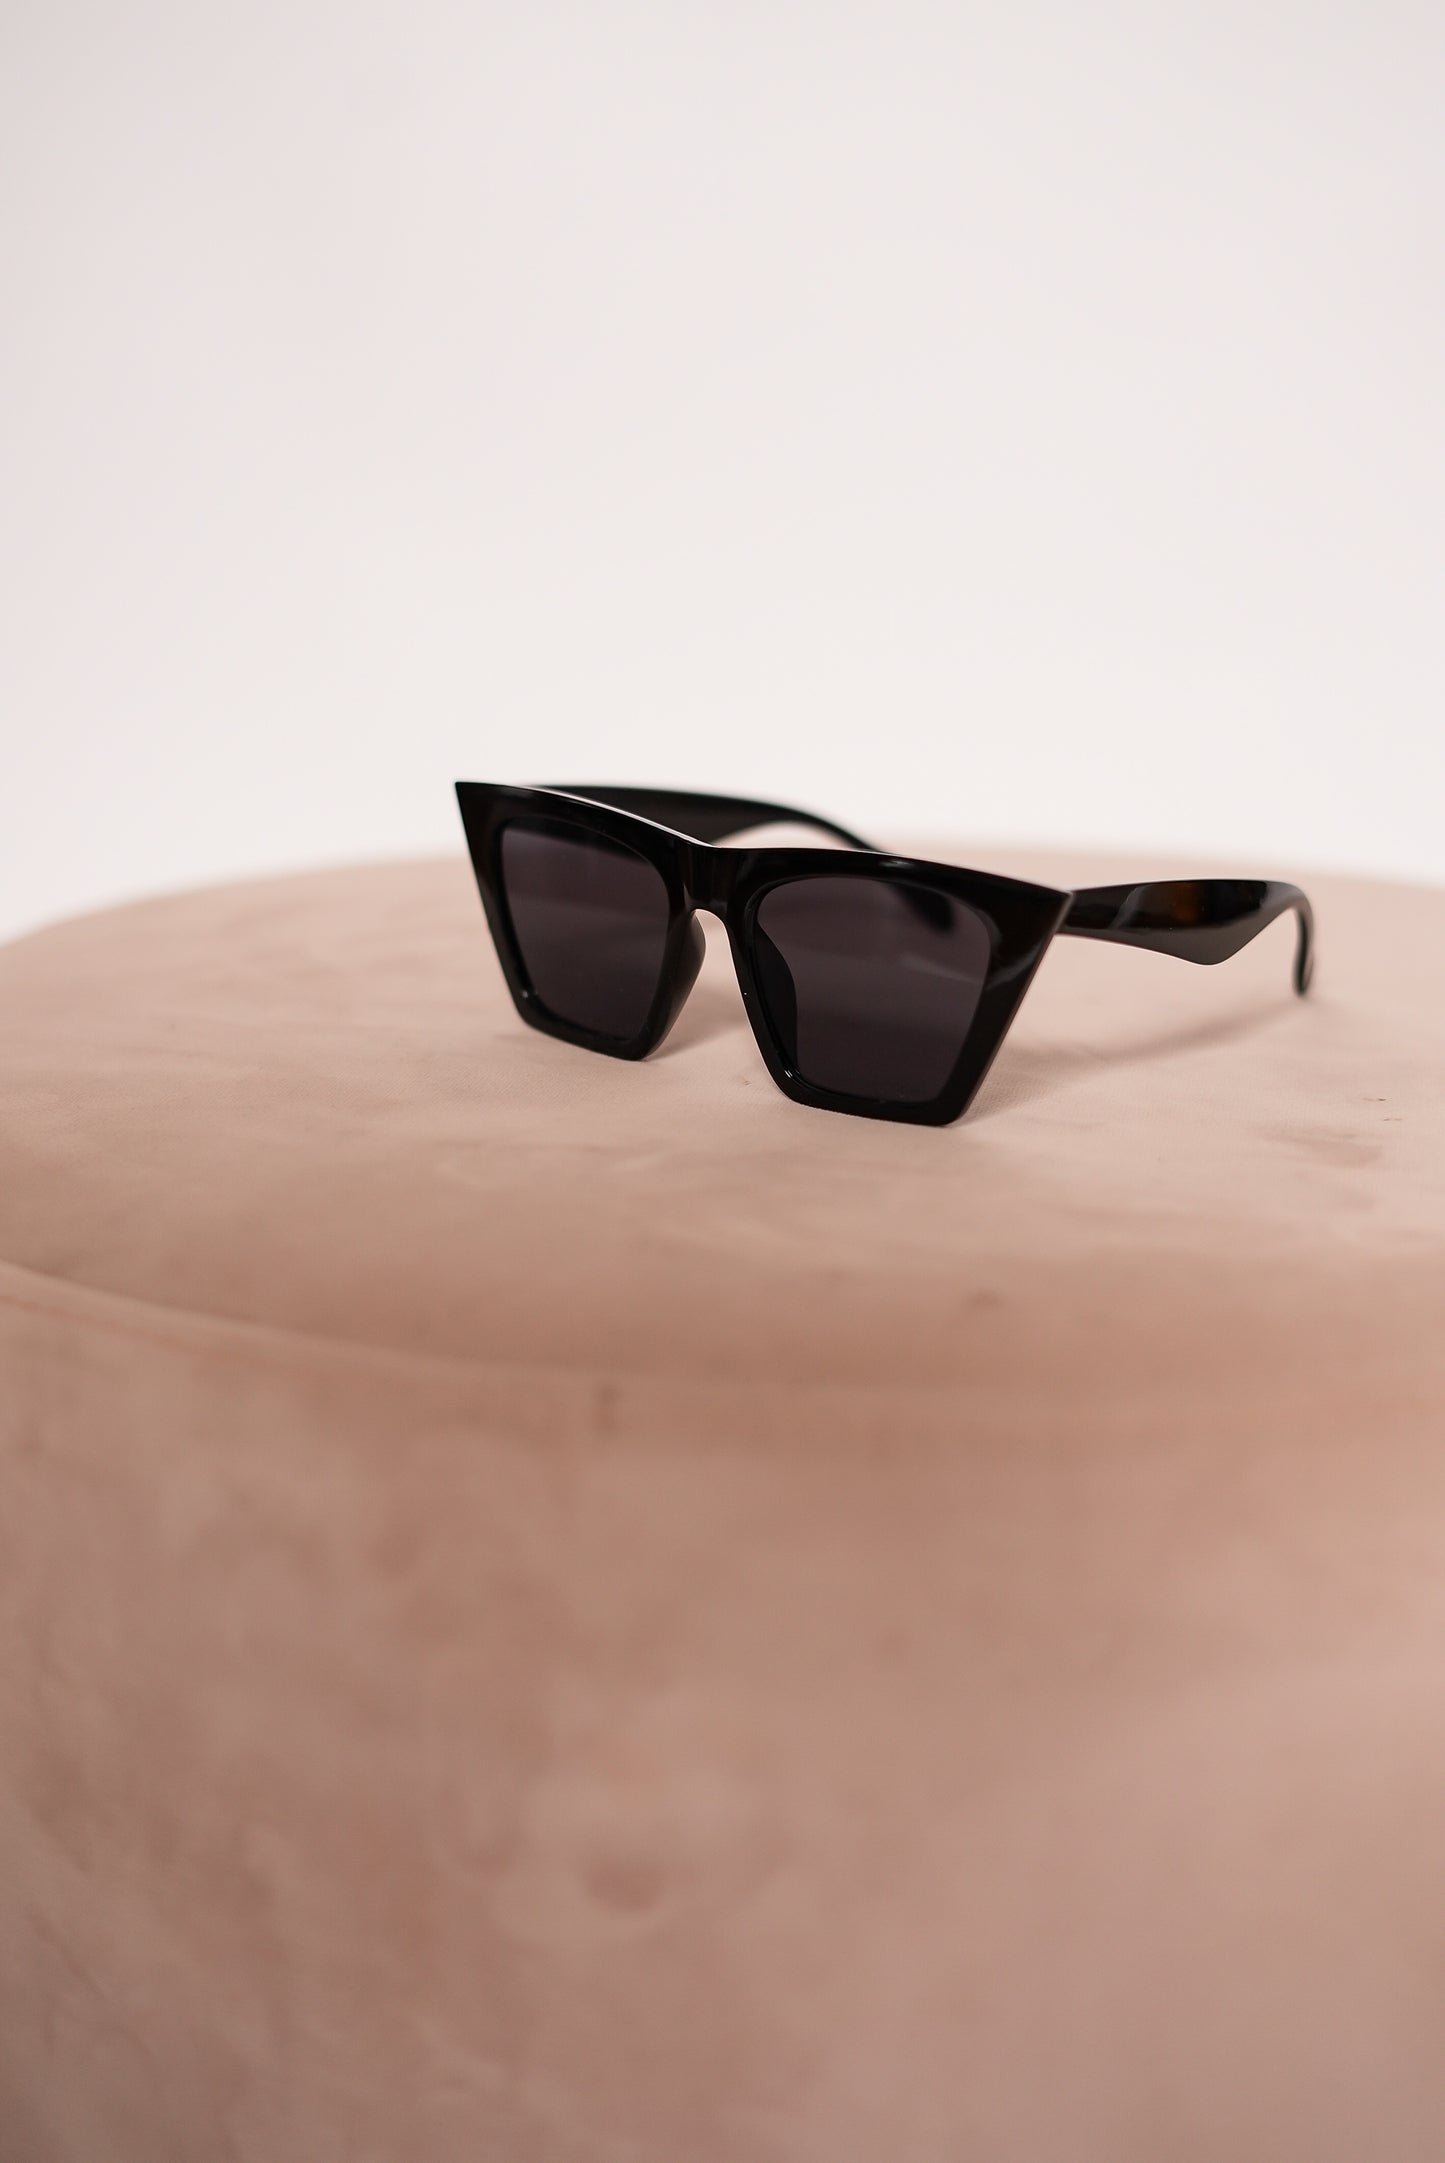 G-Squared Sunglasses